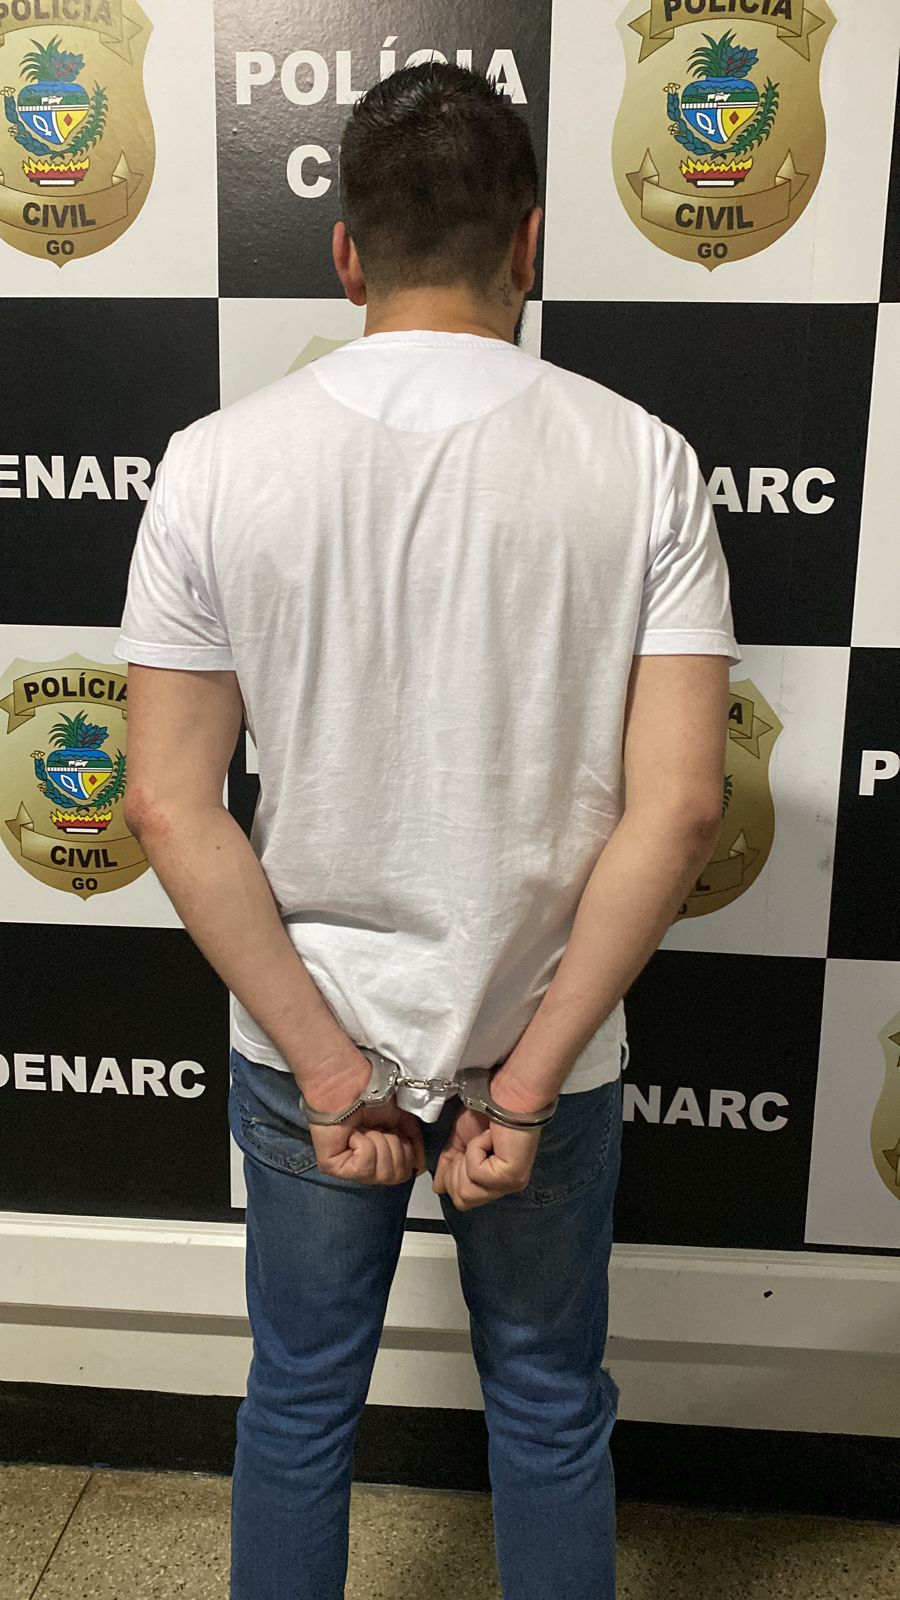 PC prende estudante investigado por venda de drogas